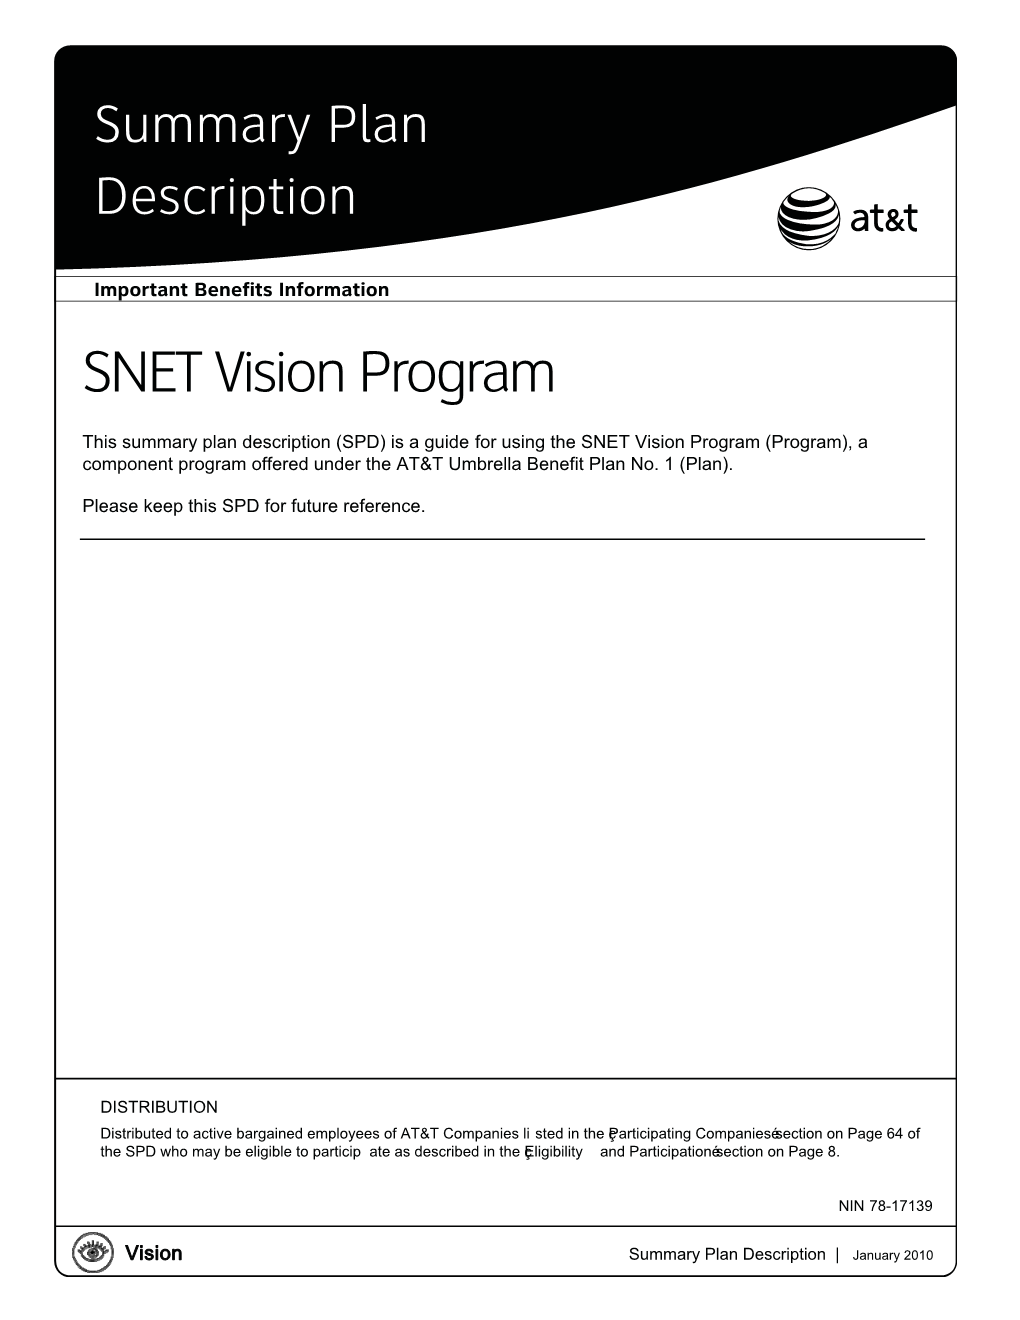 SNET Vision Program